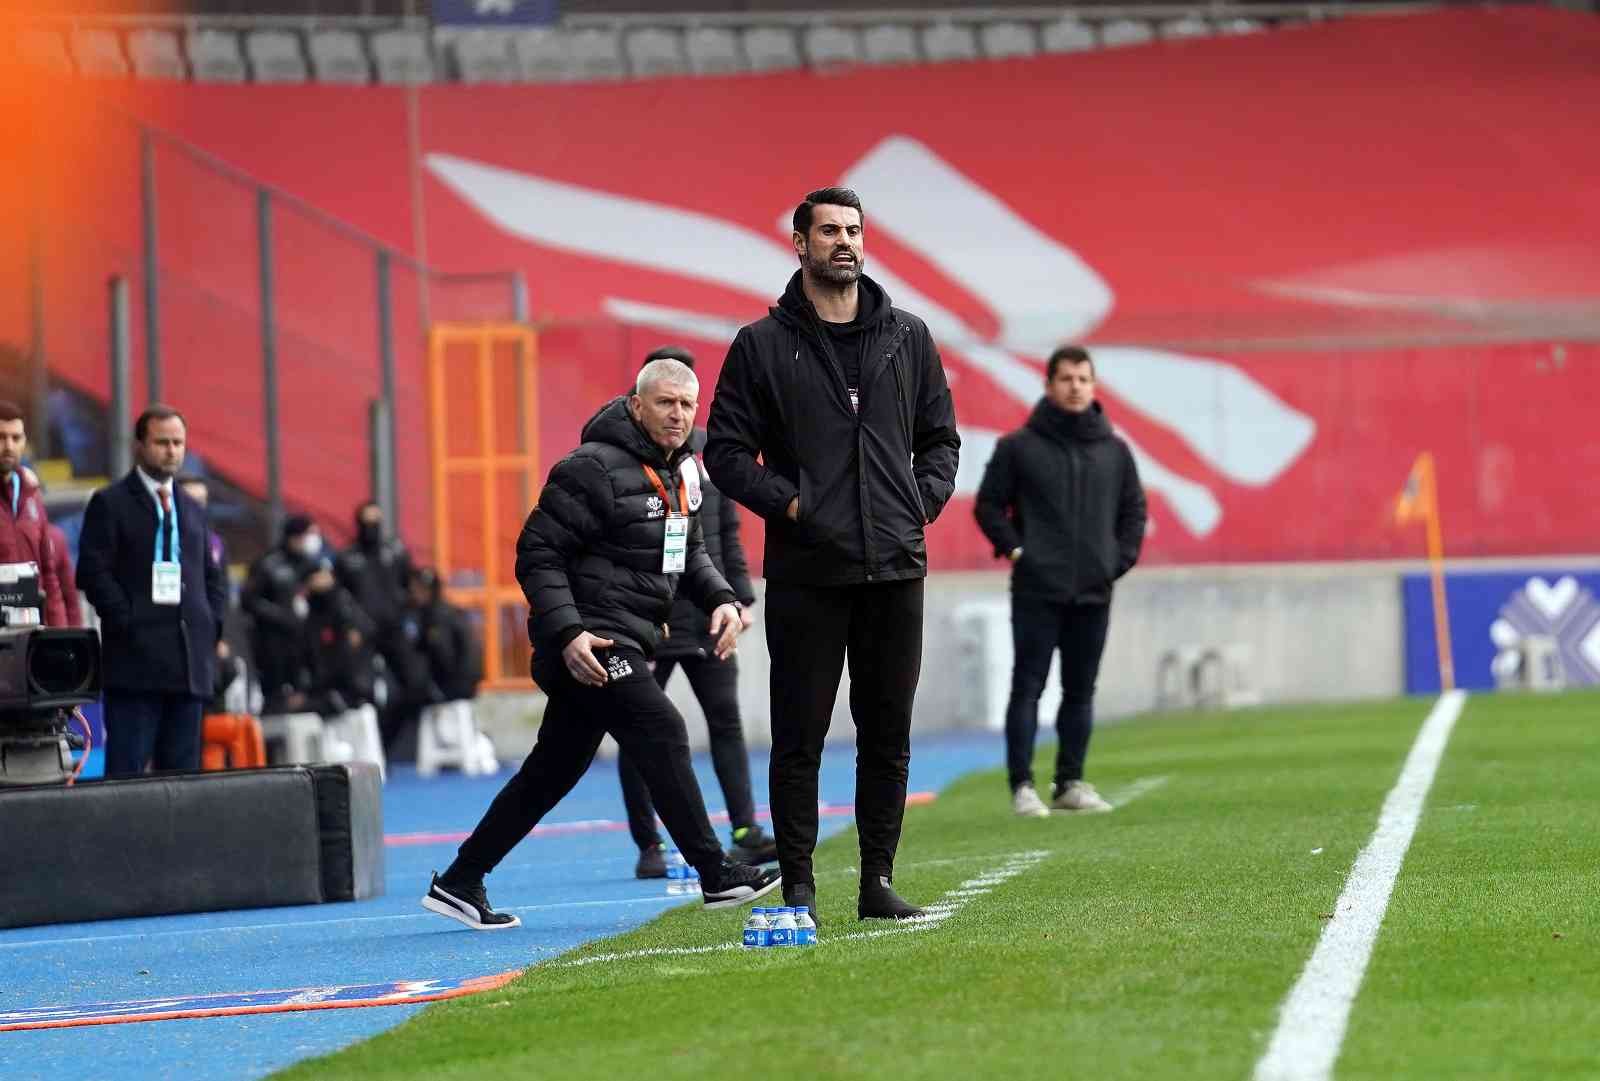 Spor Toto Süper Lig: Medipol Başakşehir: 1 - Fatih Karagümrük: 2 (Maç sonucu) #istanbul